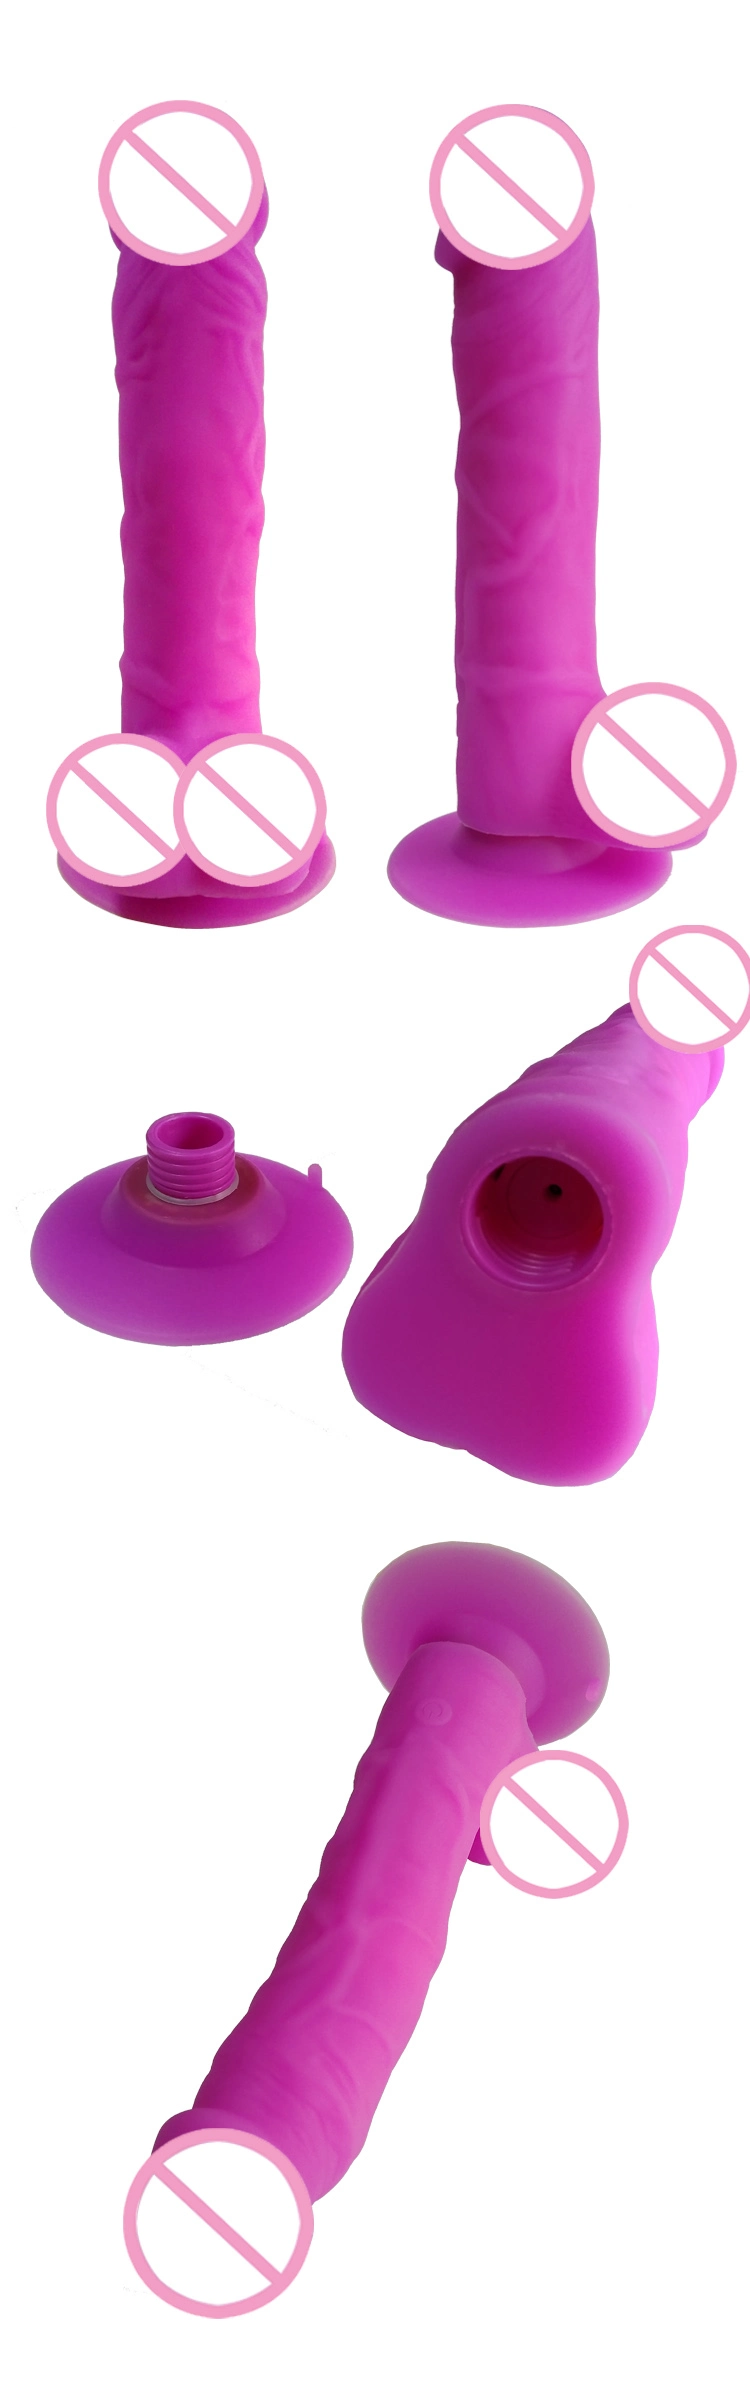 Heated Sex Toy Dildo Vibrator Rotating Head Rotating Dildo Vibrator